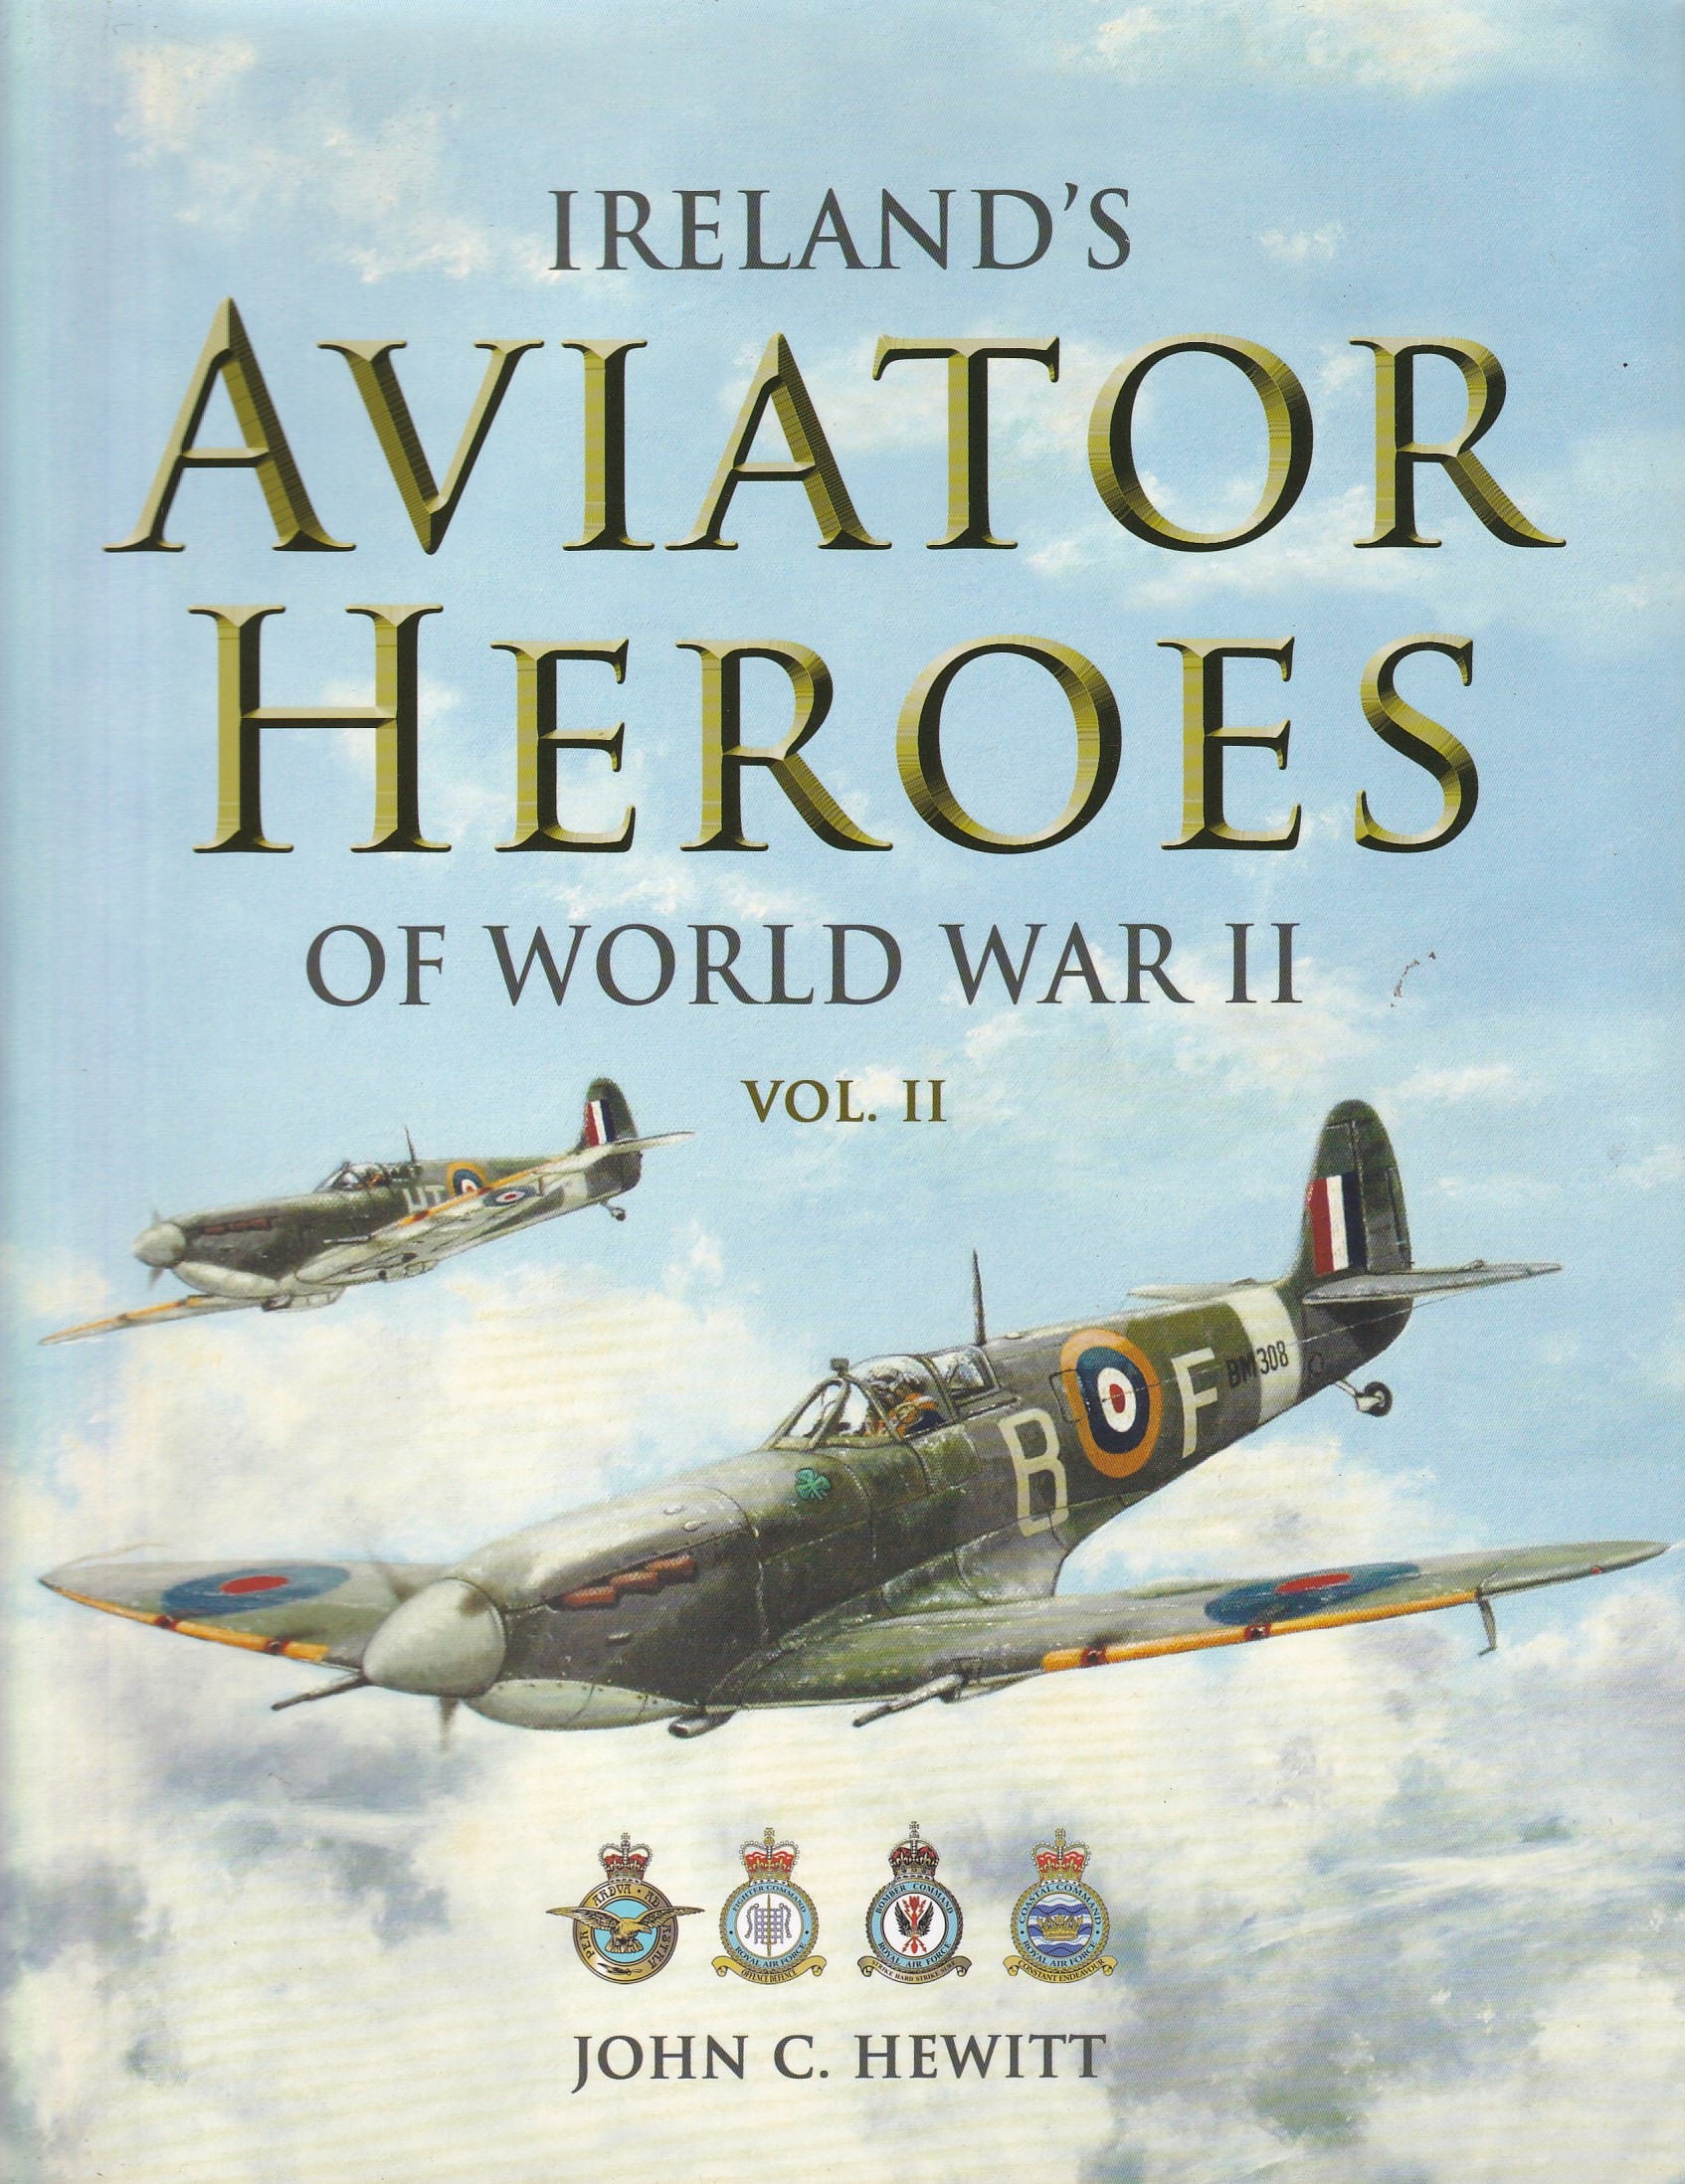 Ireland’s Aviator Heroes of World War II: Vol. 2 by John C. Hewitt